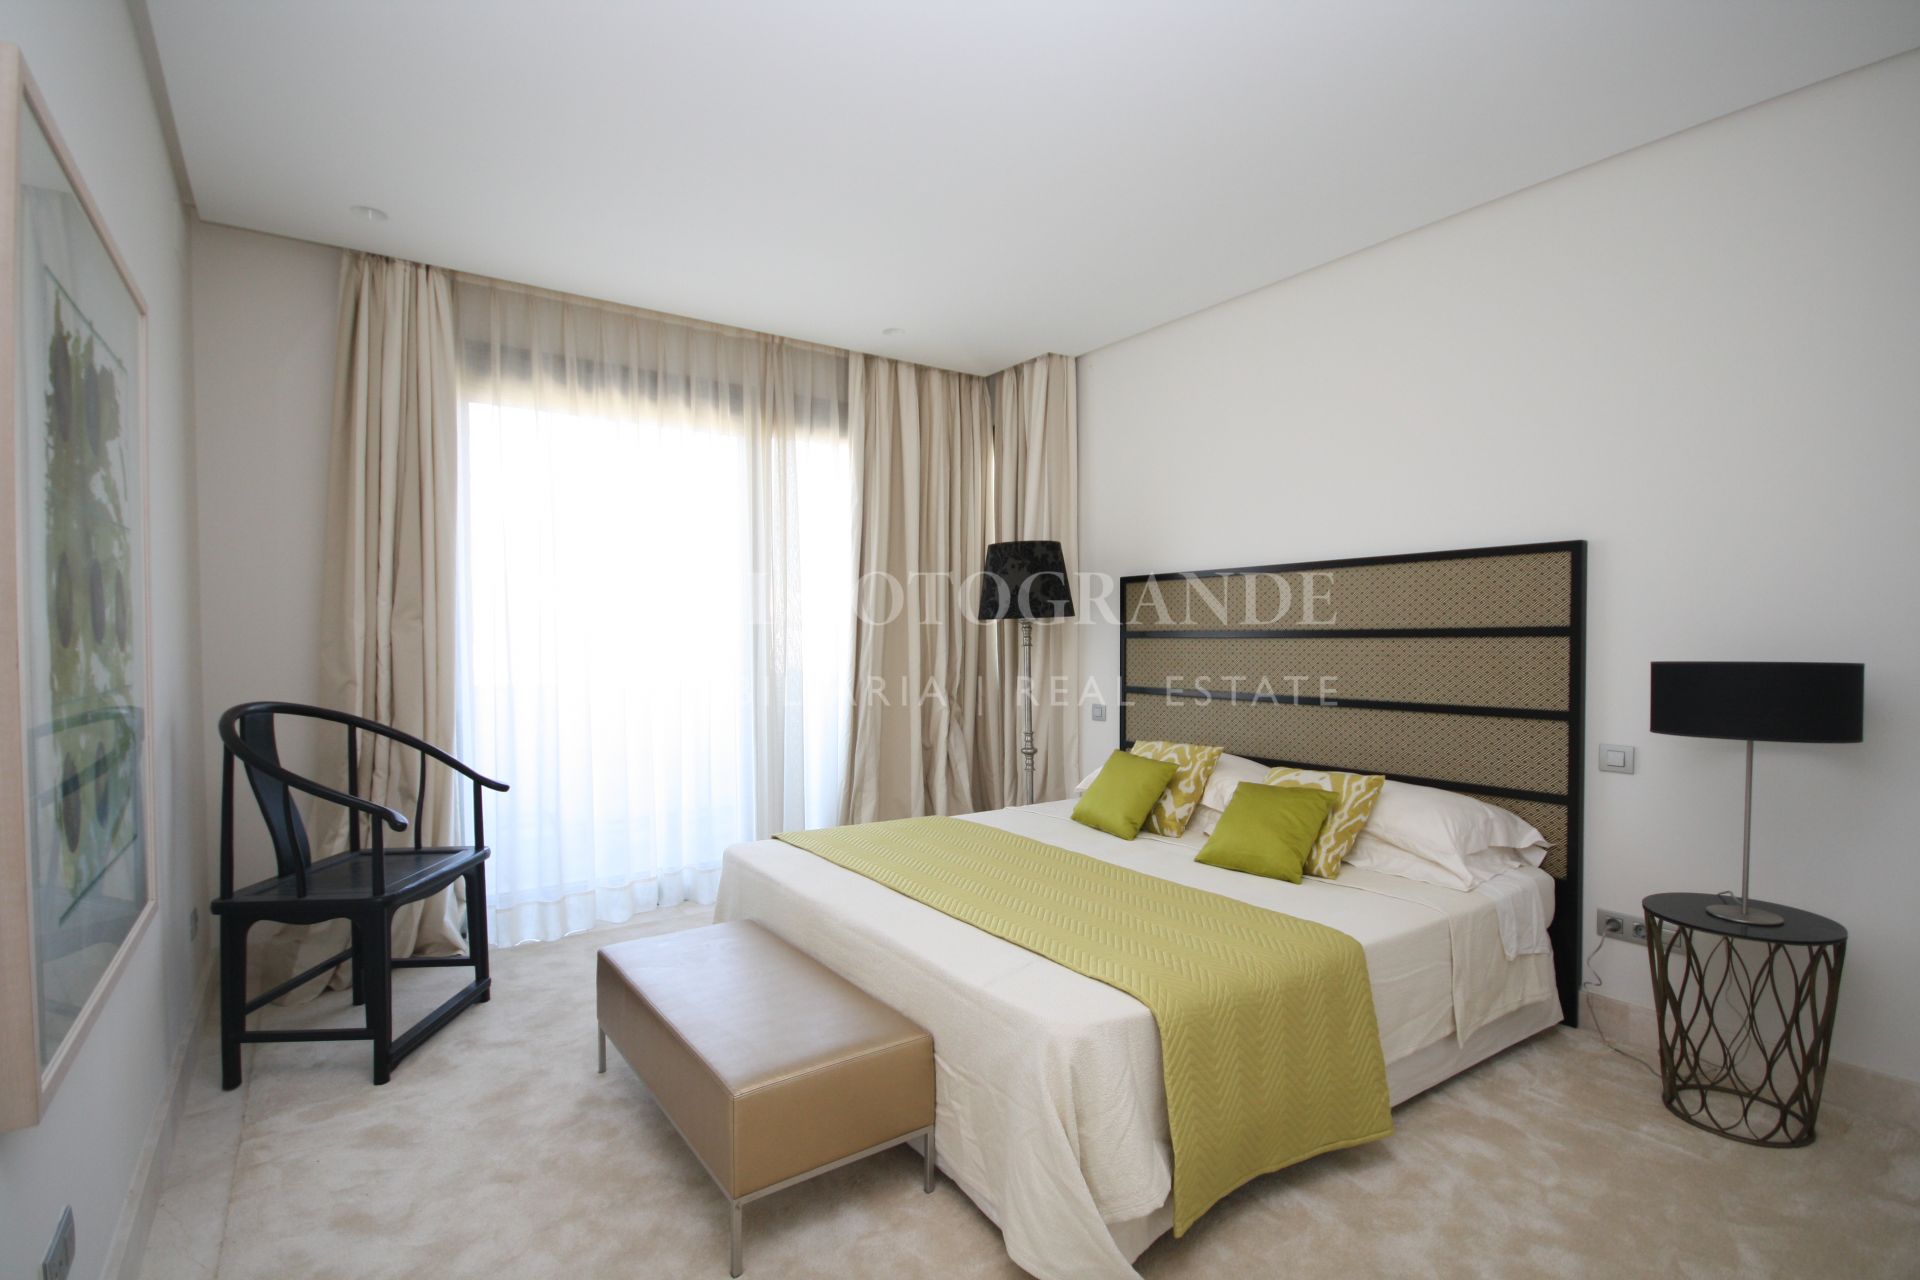 Luxury 4 bedroom unfurnished villa -apartment next to Valderrama Golf Club